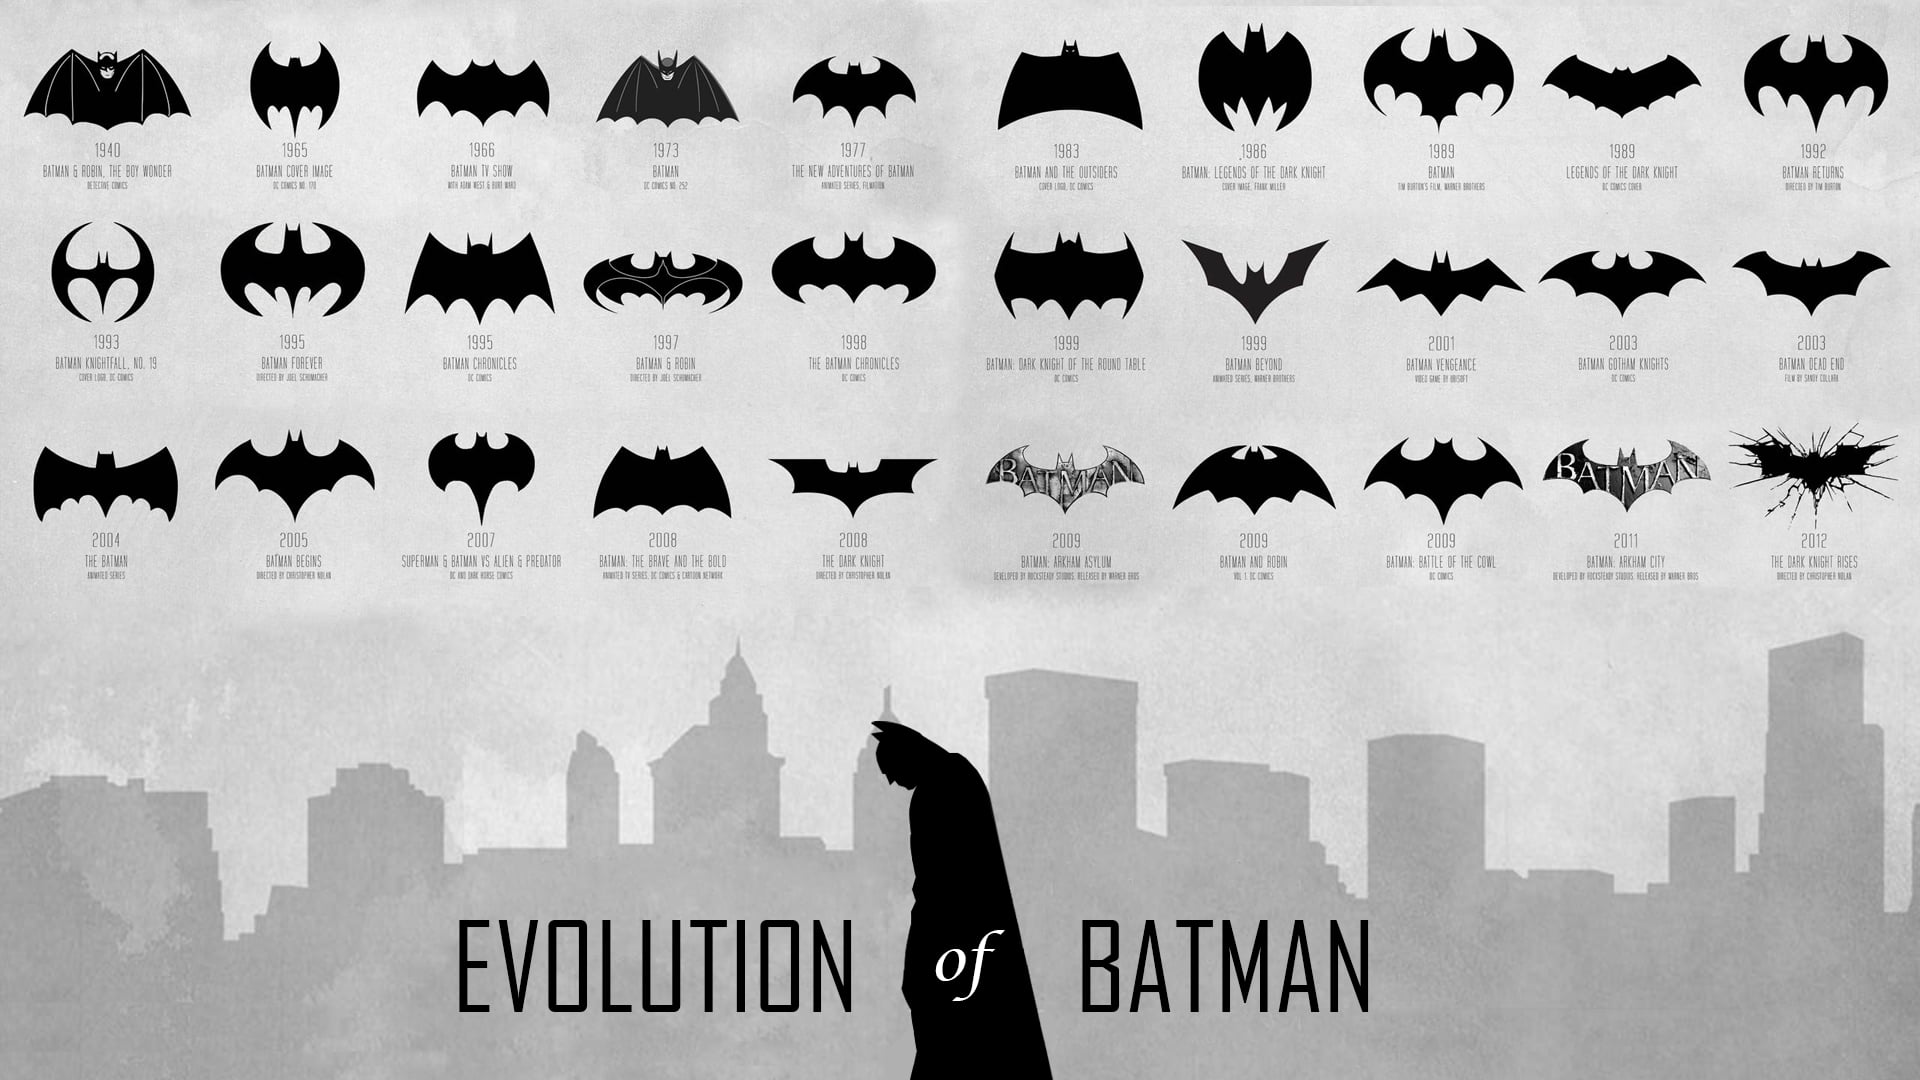 Evolution of Batman chart